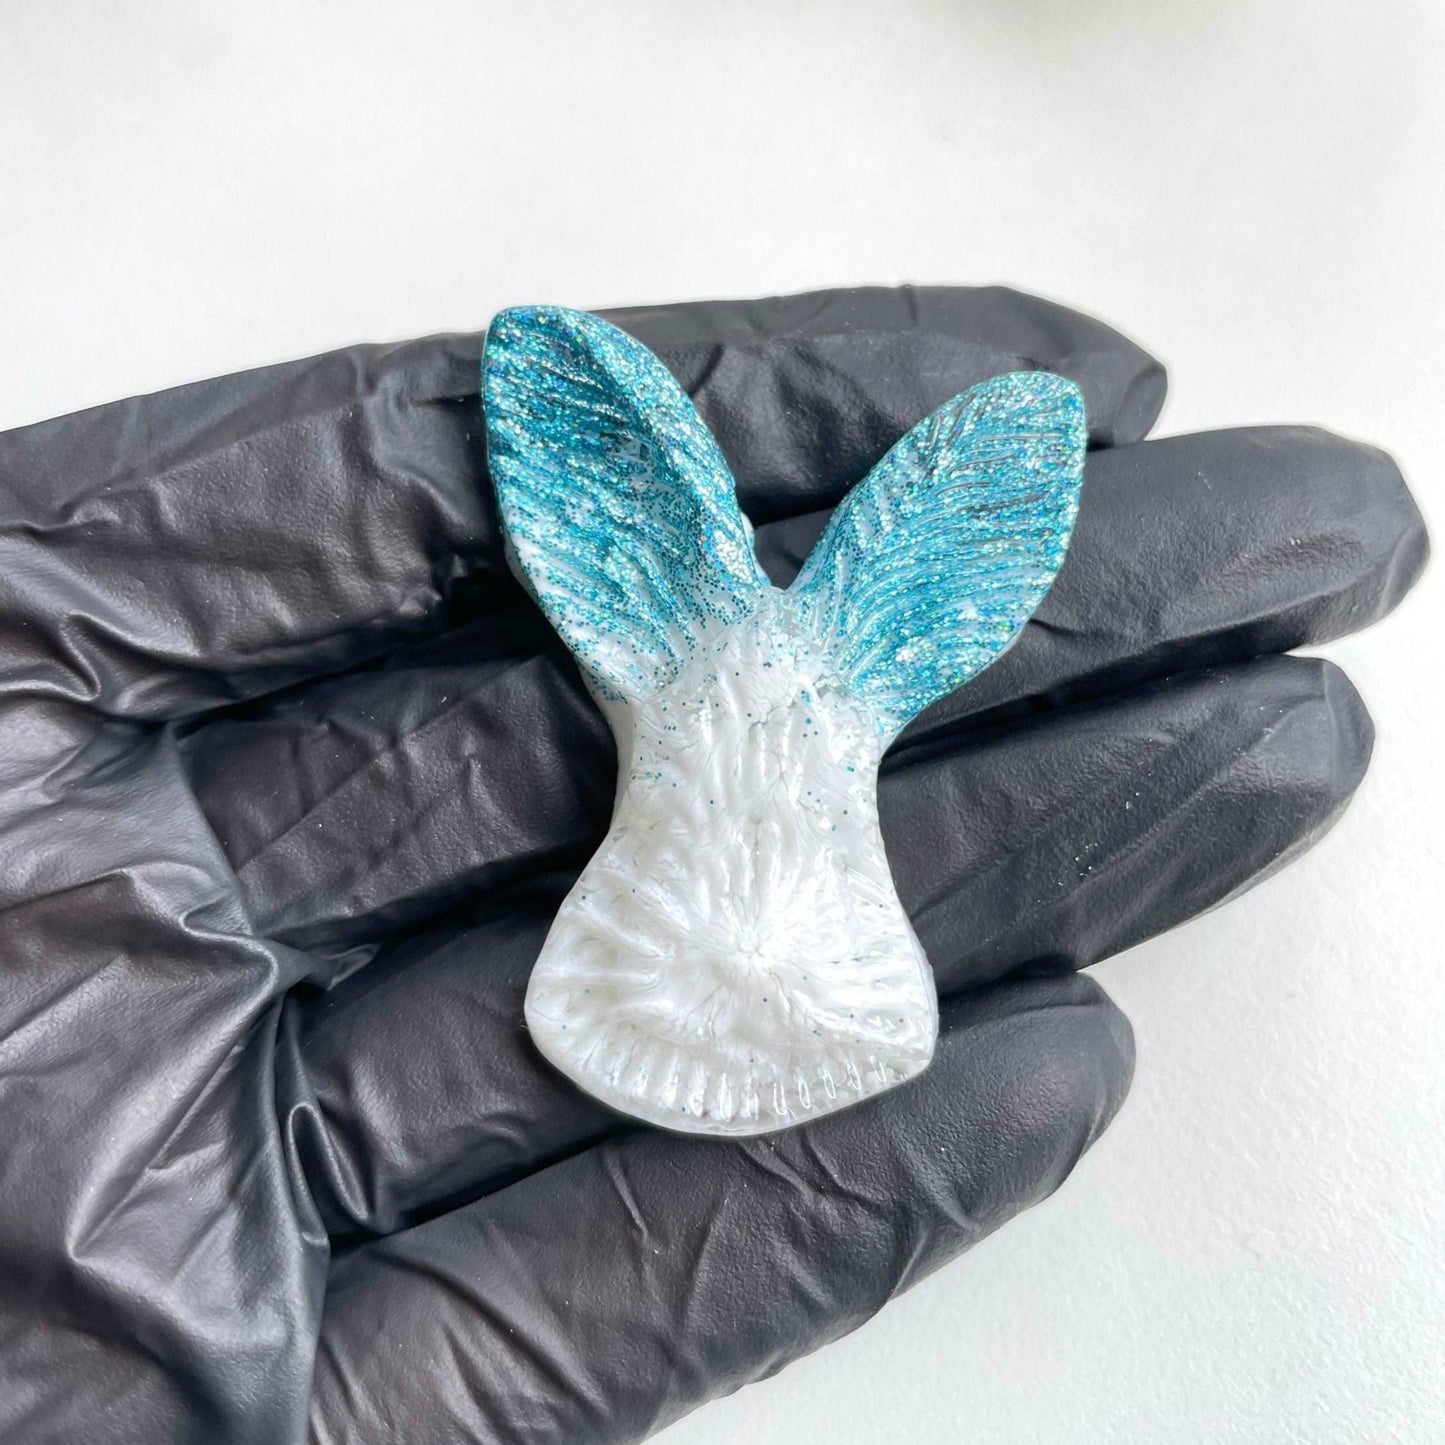 3 Set Bunny rabbit figurine Silicone Mold. Silicone bunny resin art figurine epoxy form miniature bunny clay art rabbit figurine silicone